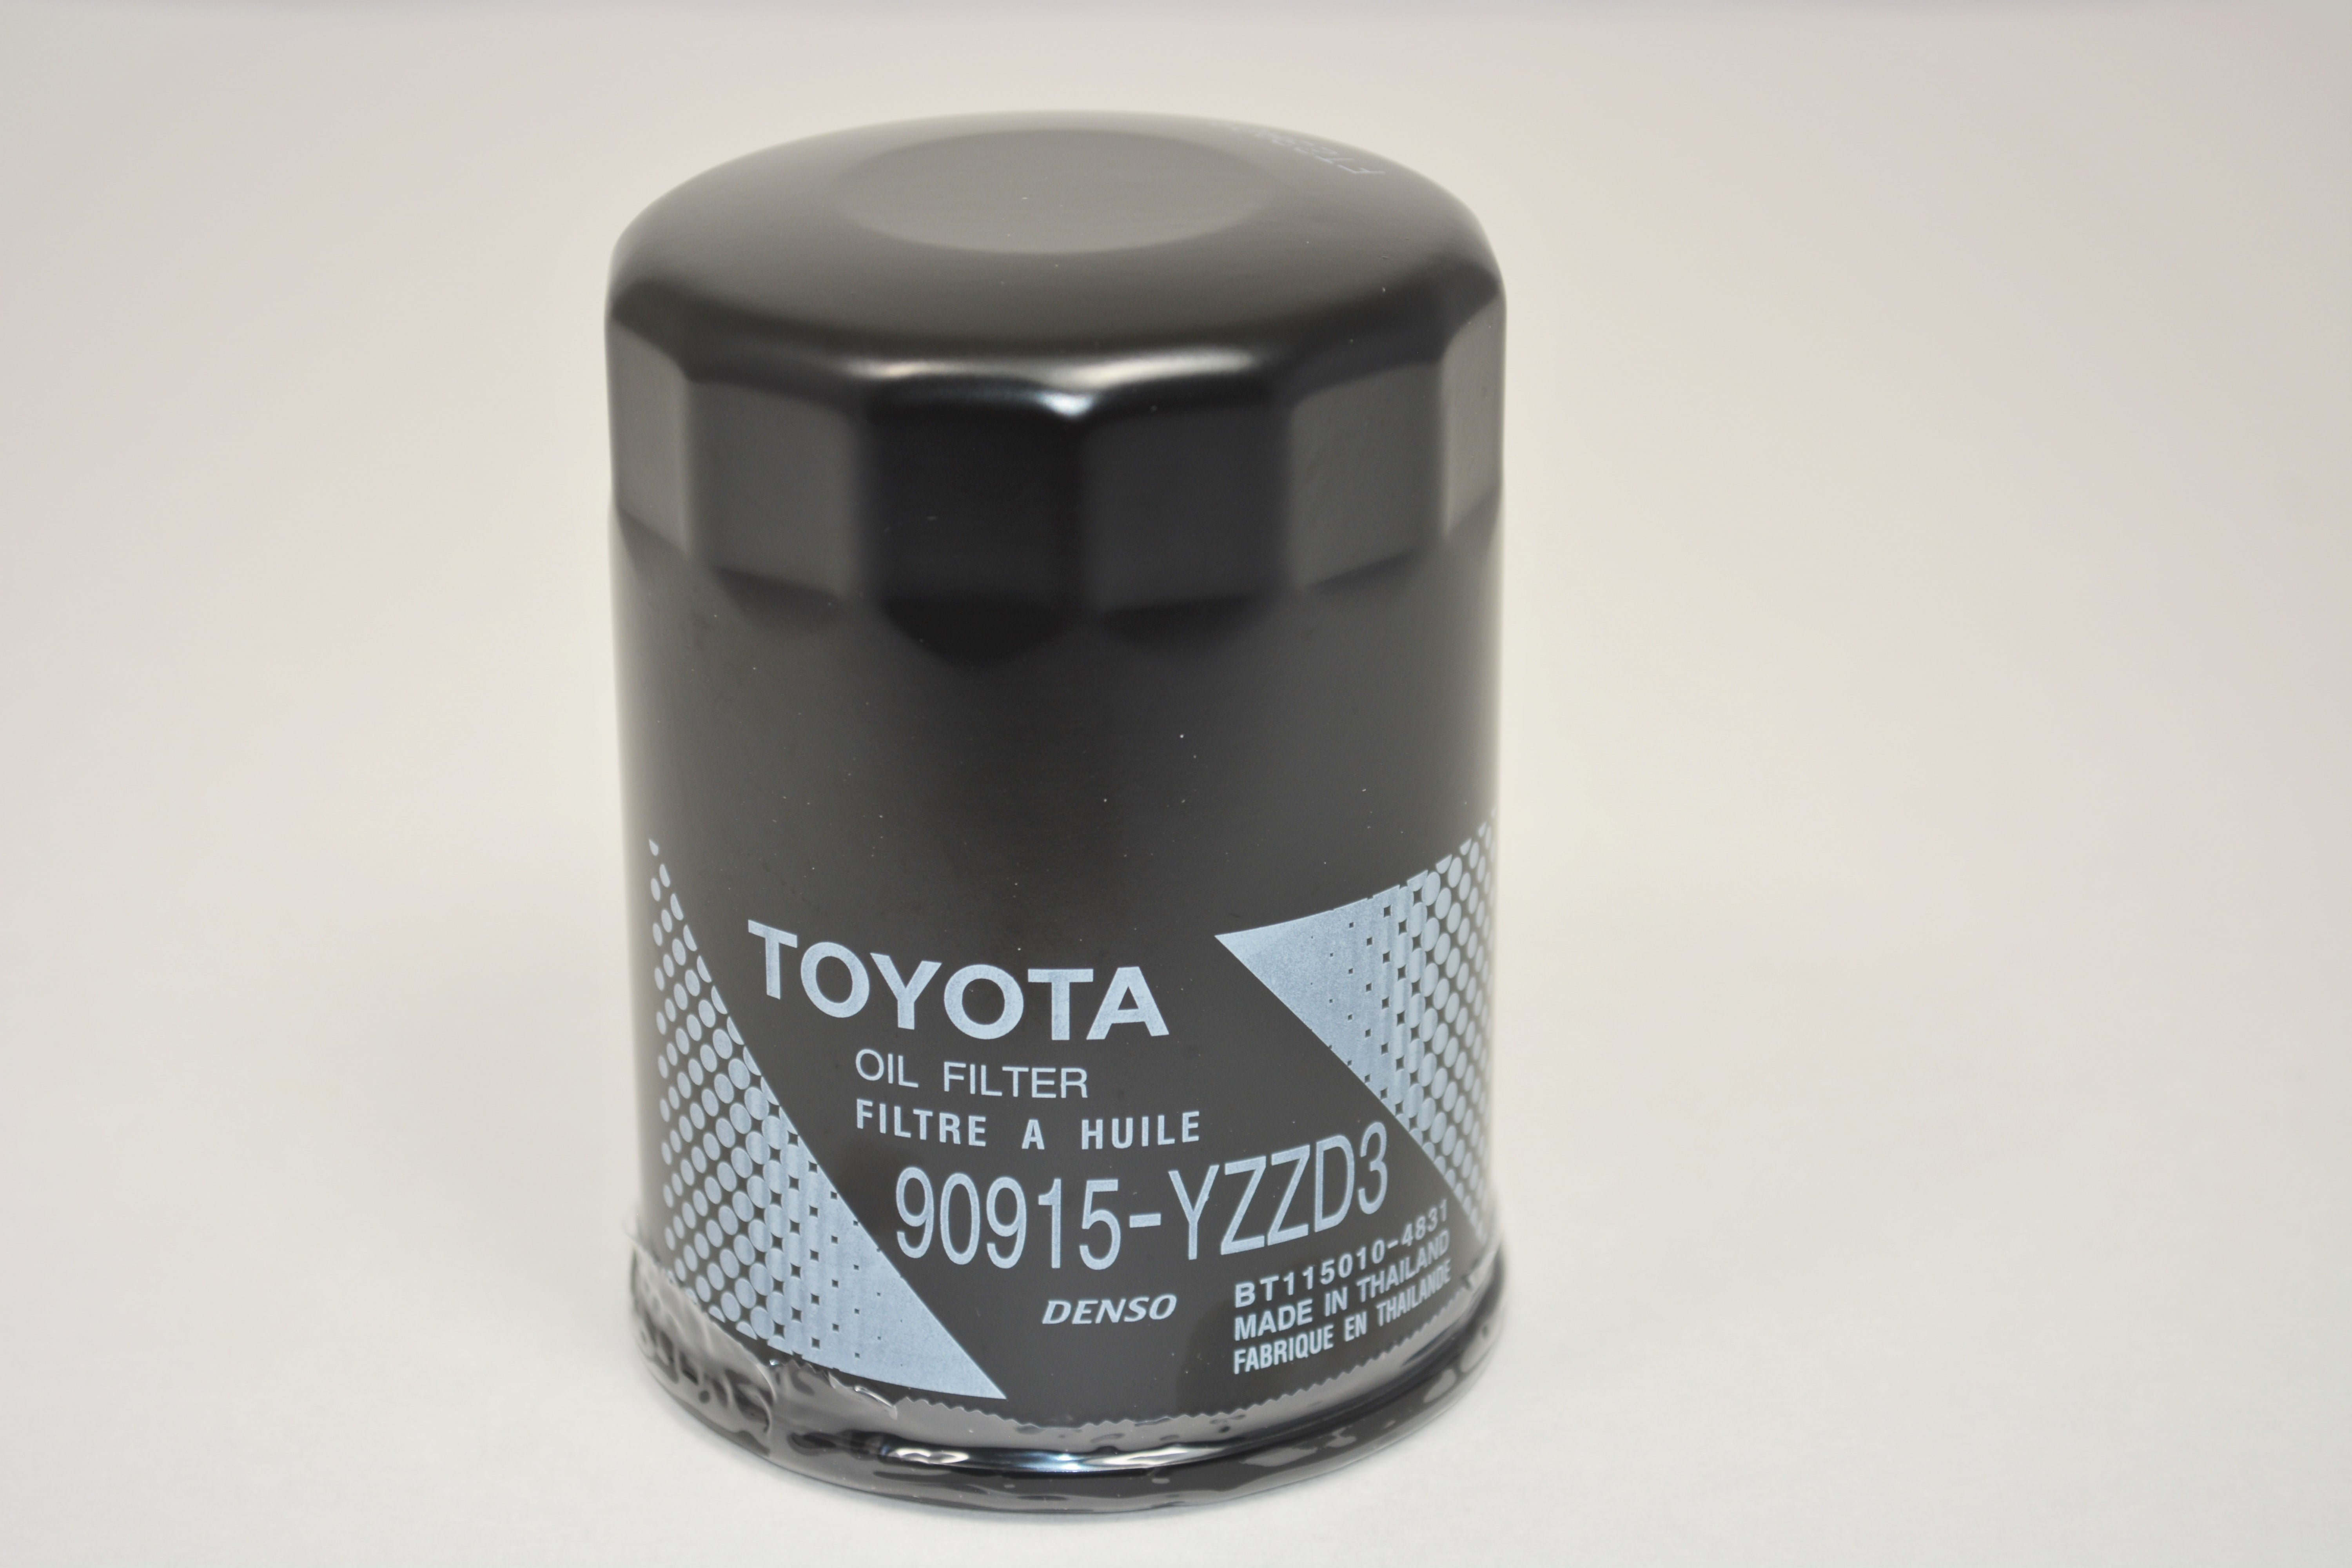 Genuine Toyota Oil Filter 90915-YZZD3